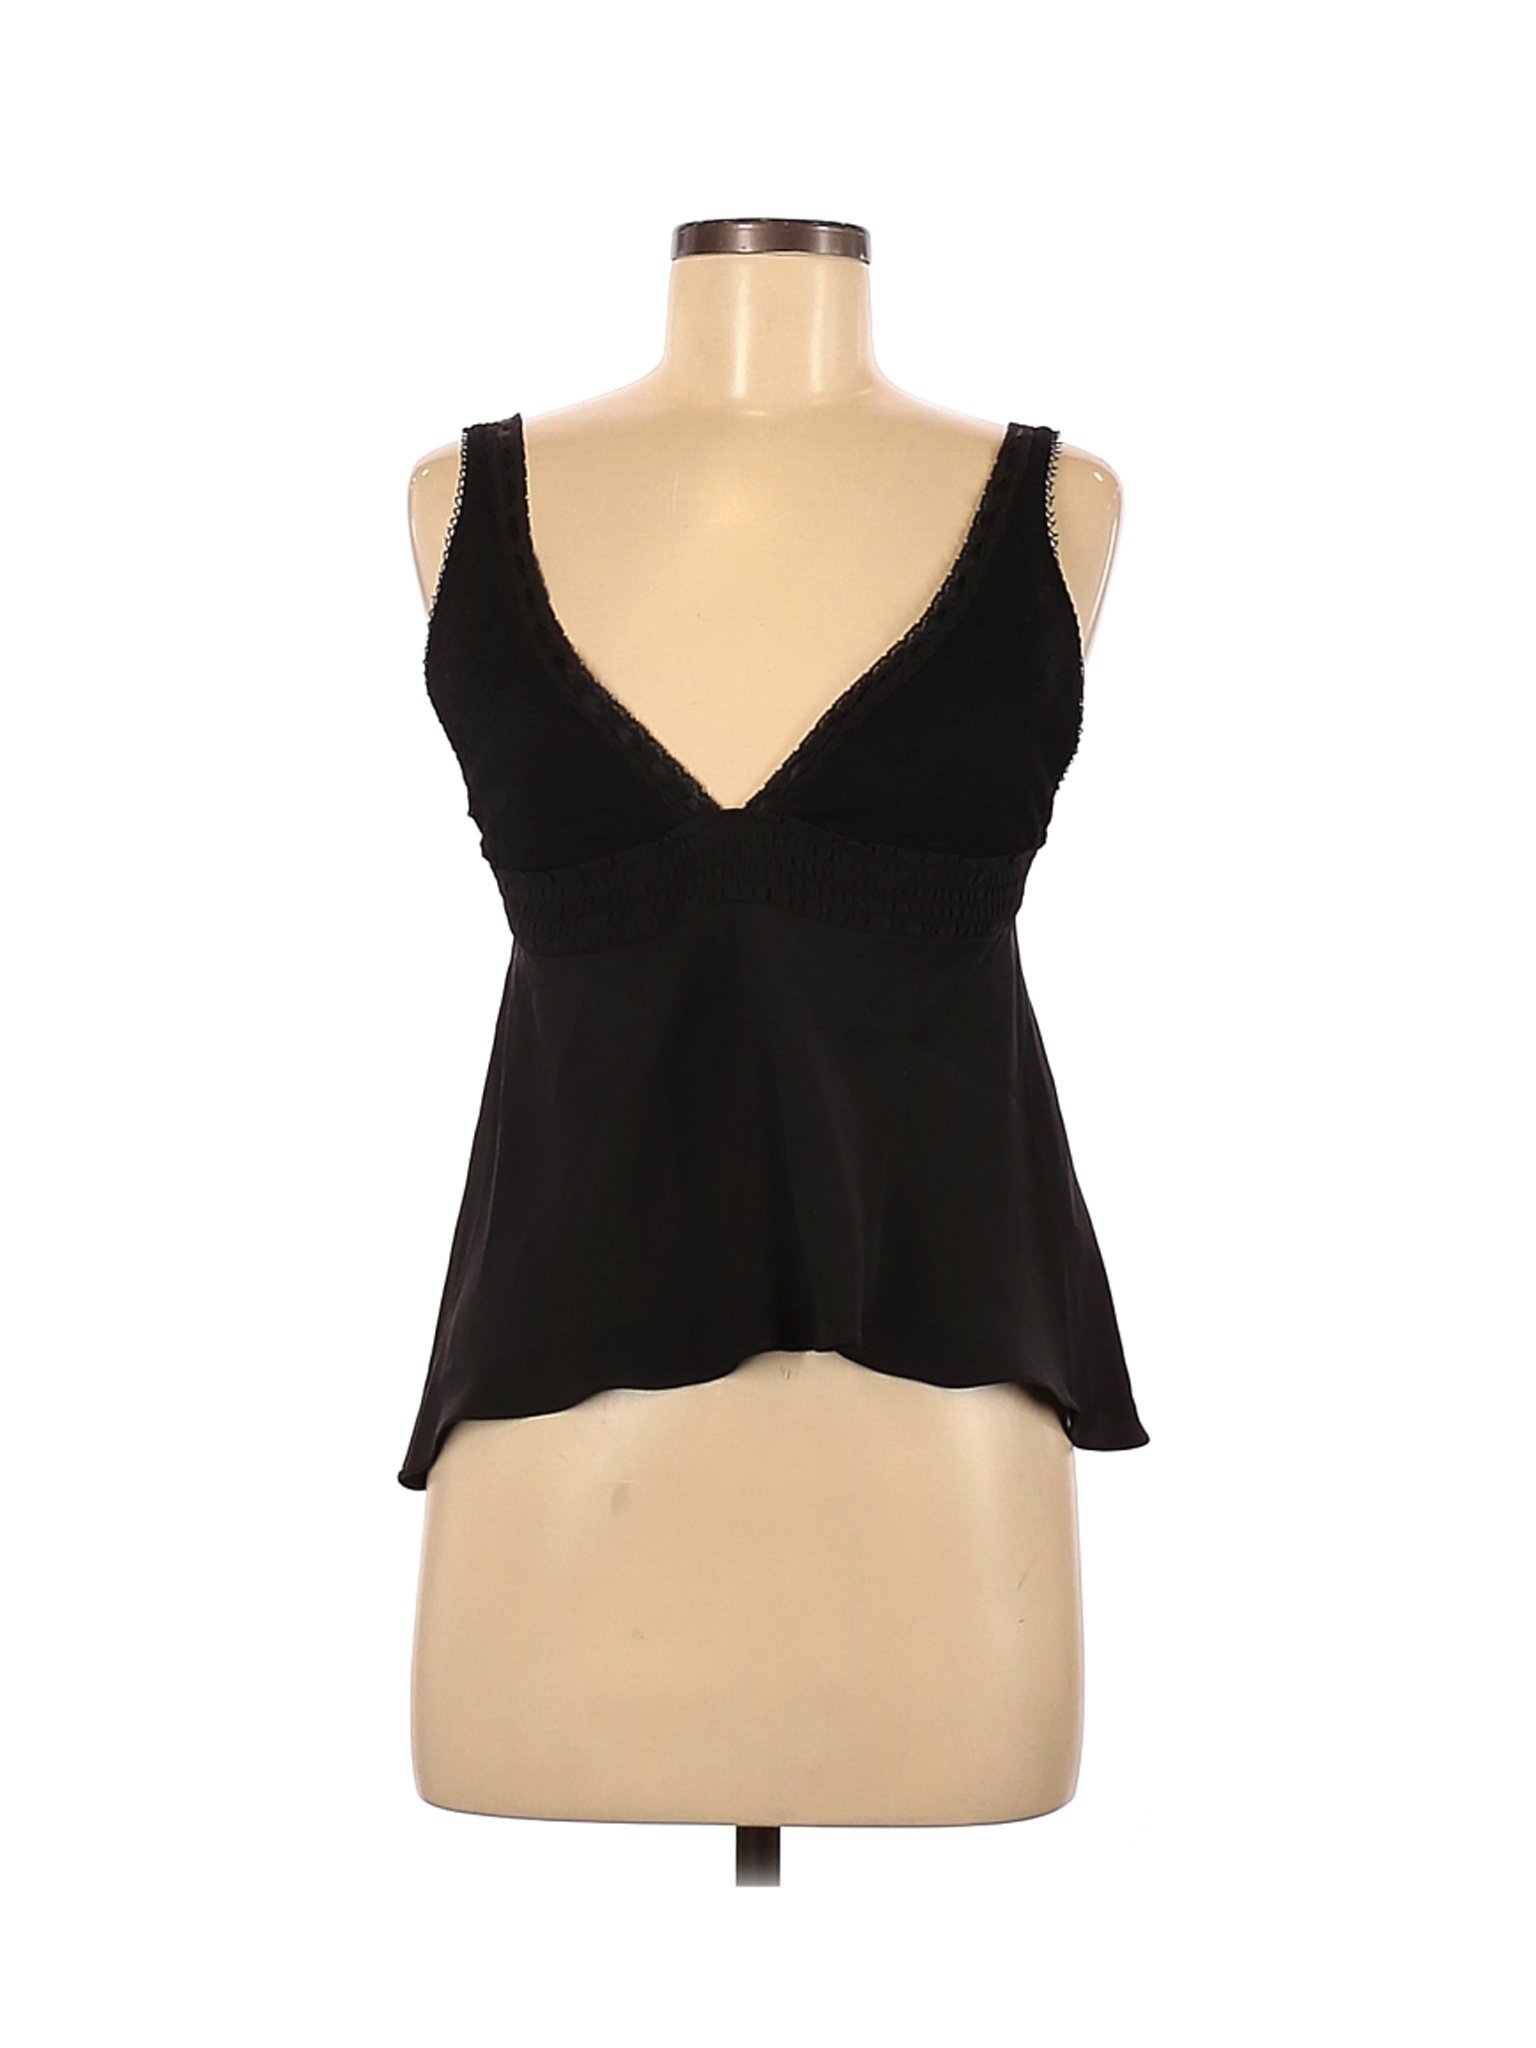 Emporio Armani Women Black Sleeveless Silk Top 6 | eBay